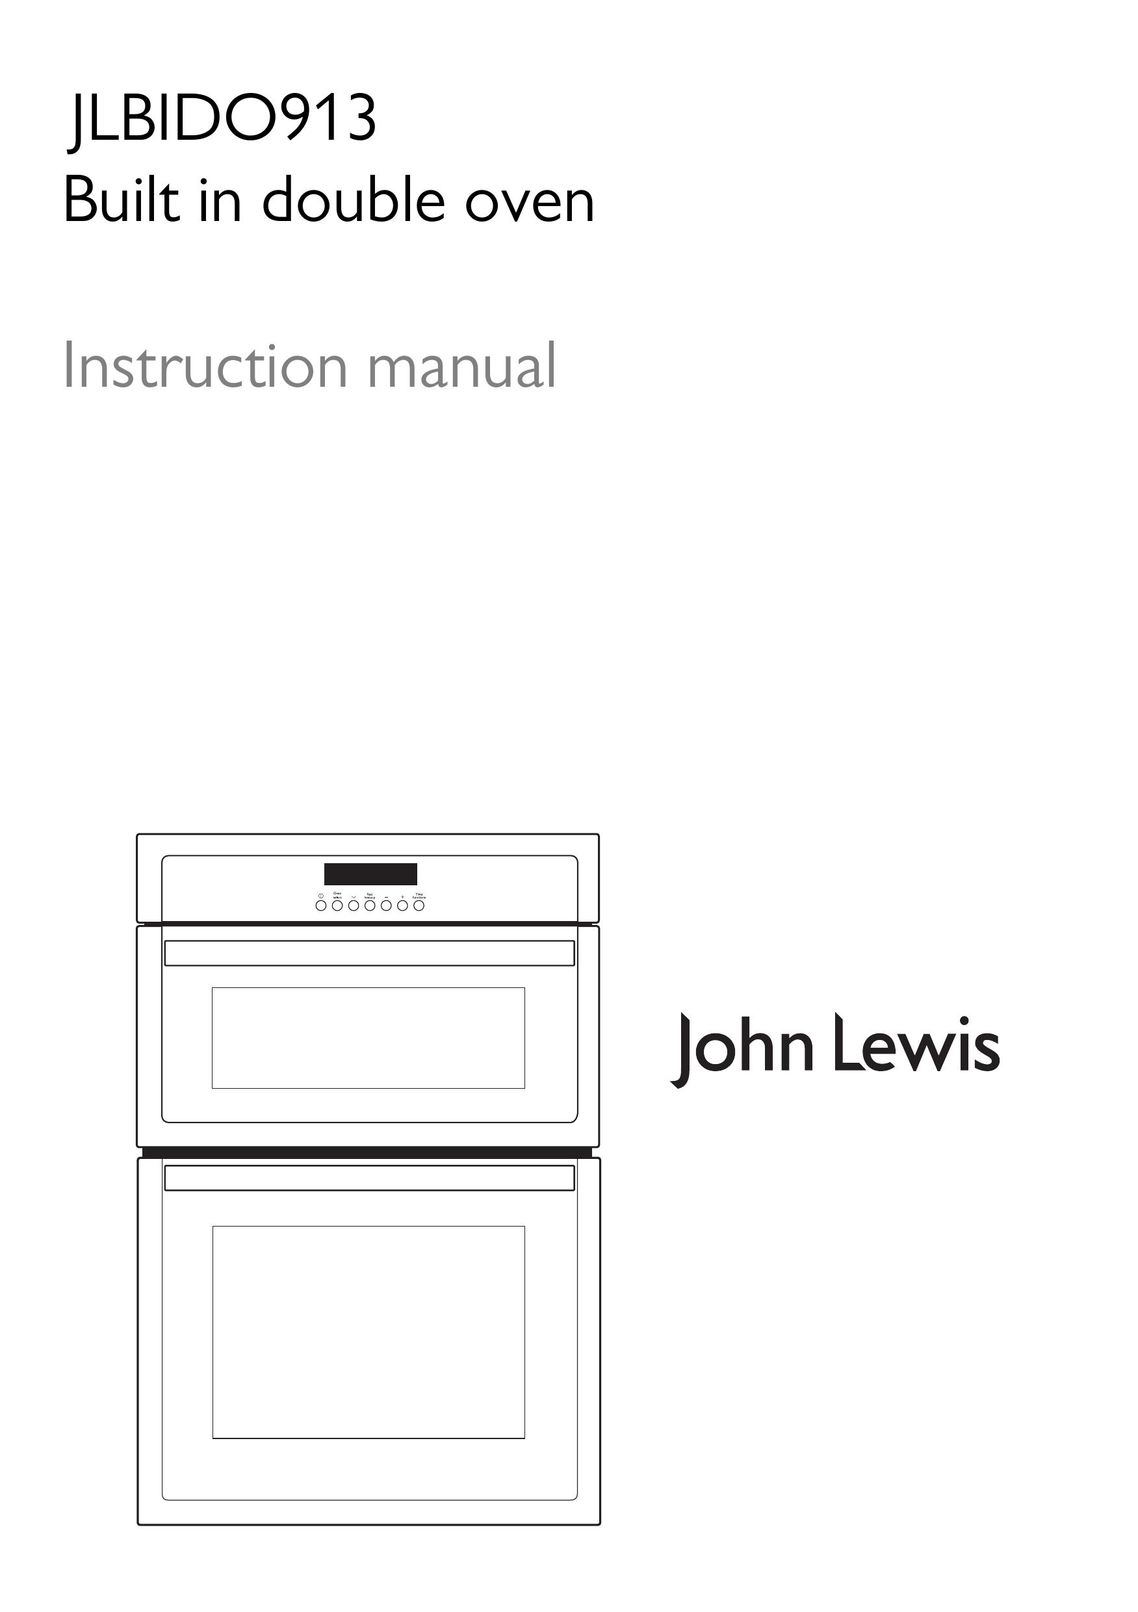 John Lewis JLBIDO913 Double Oven User Manual